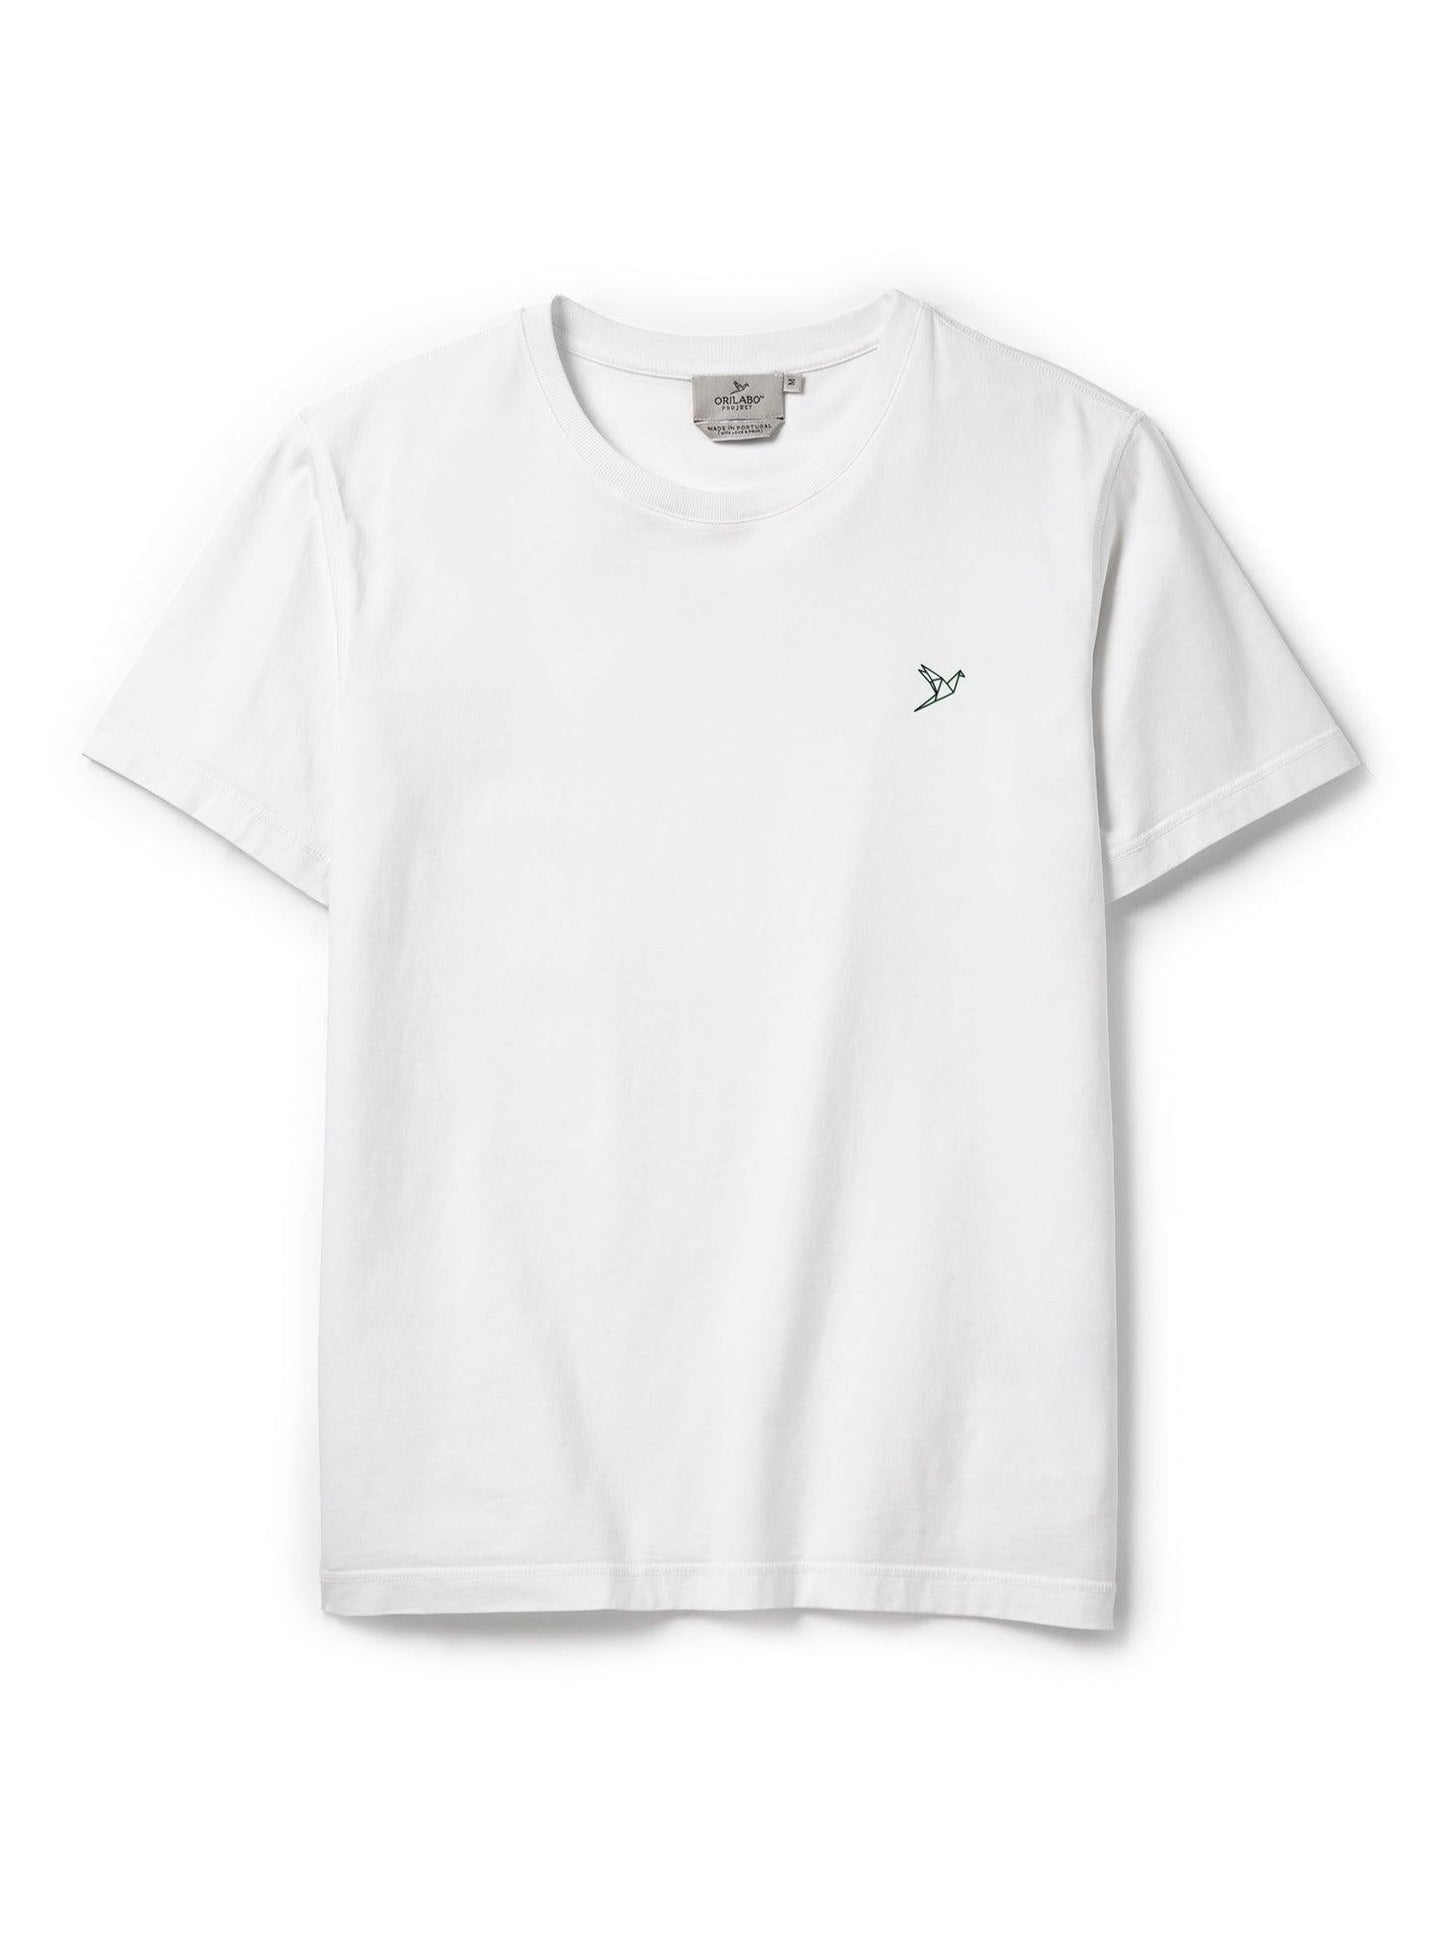 
                  
                    Men's Big Logo T-shirt - White - ORILABO Project
                  
                